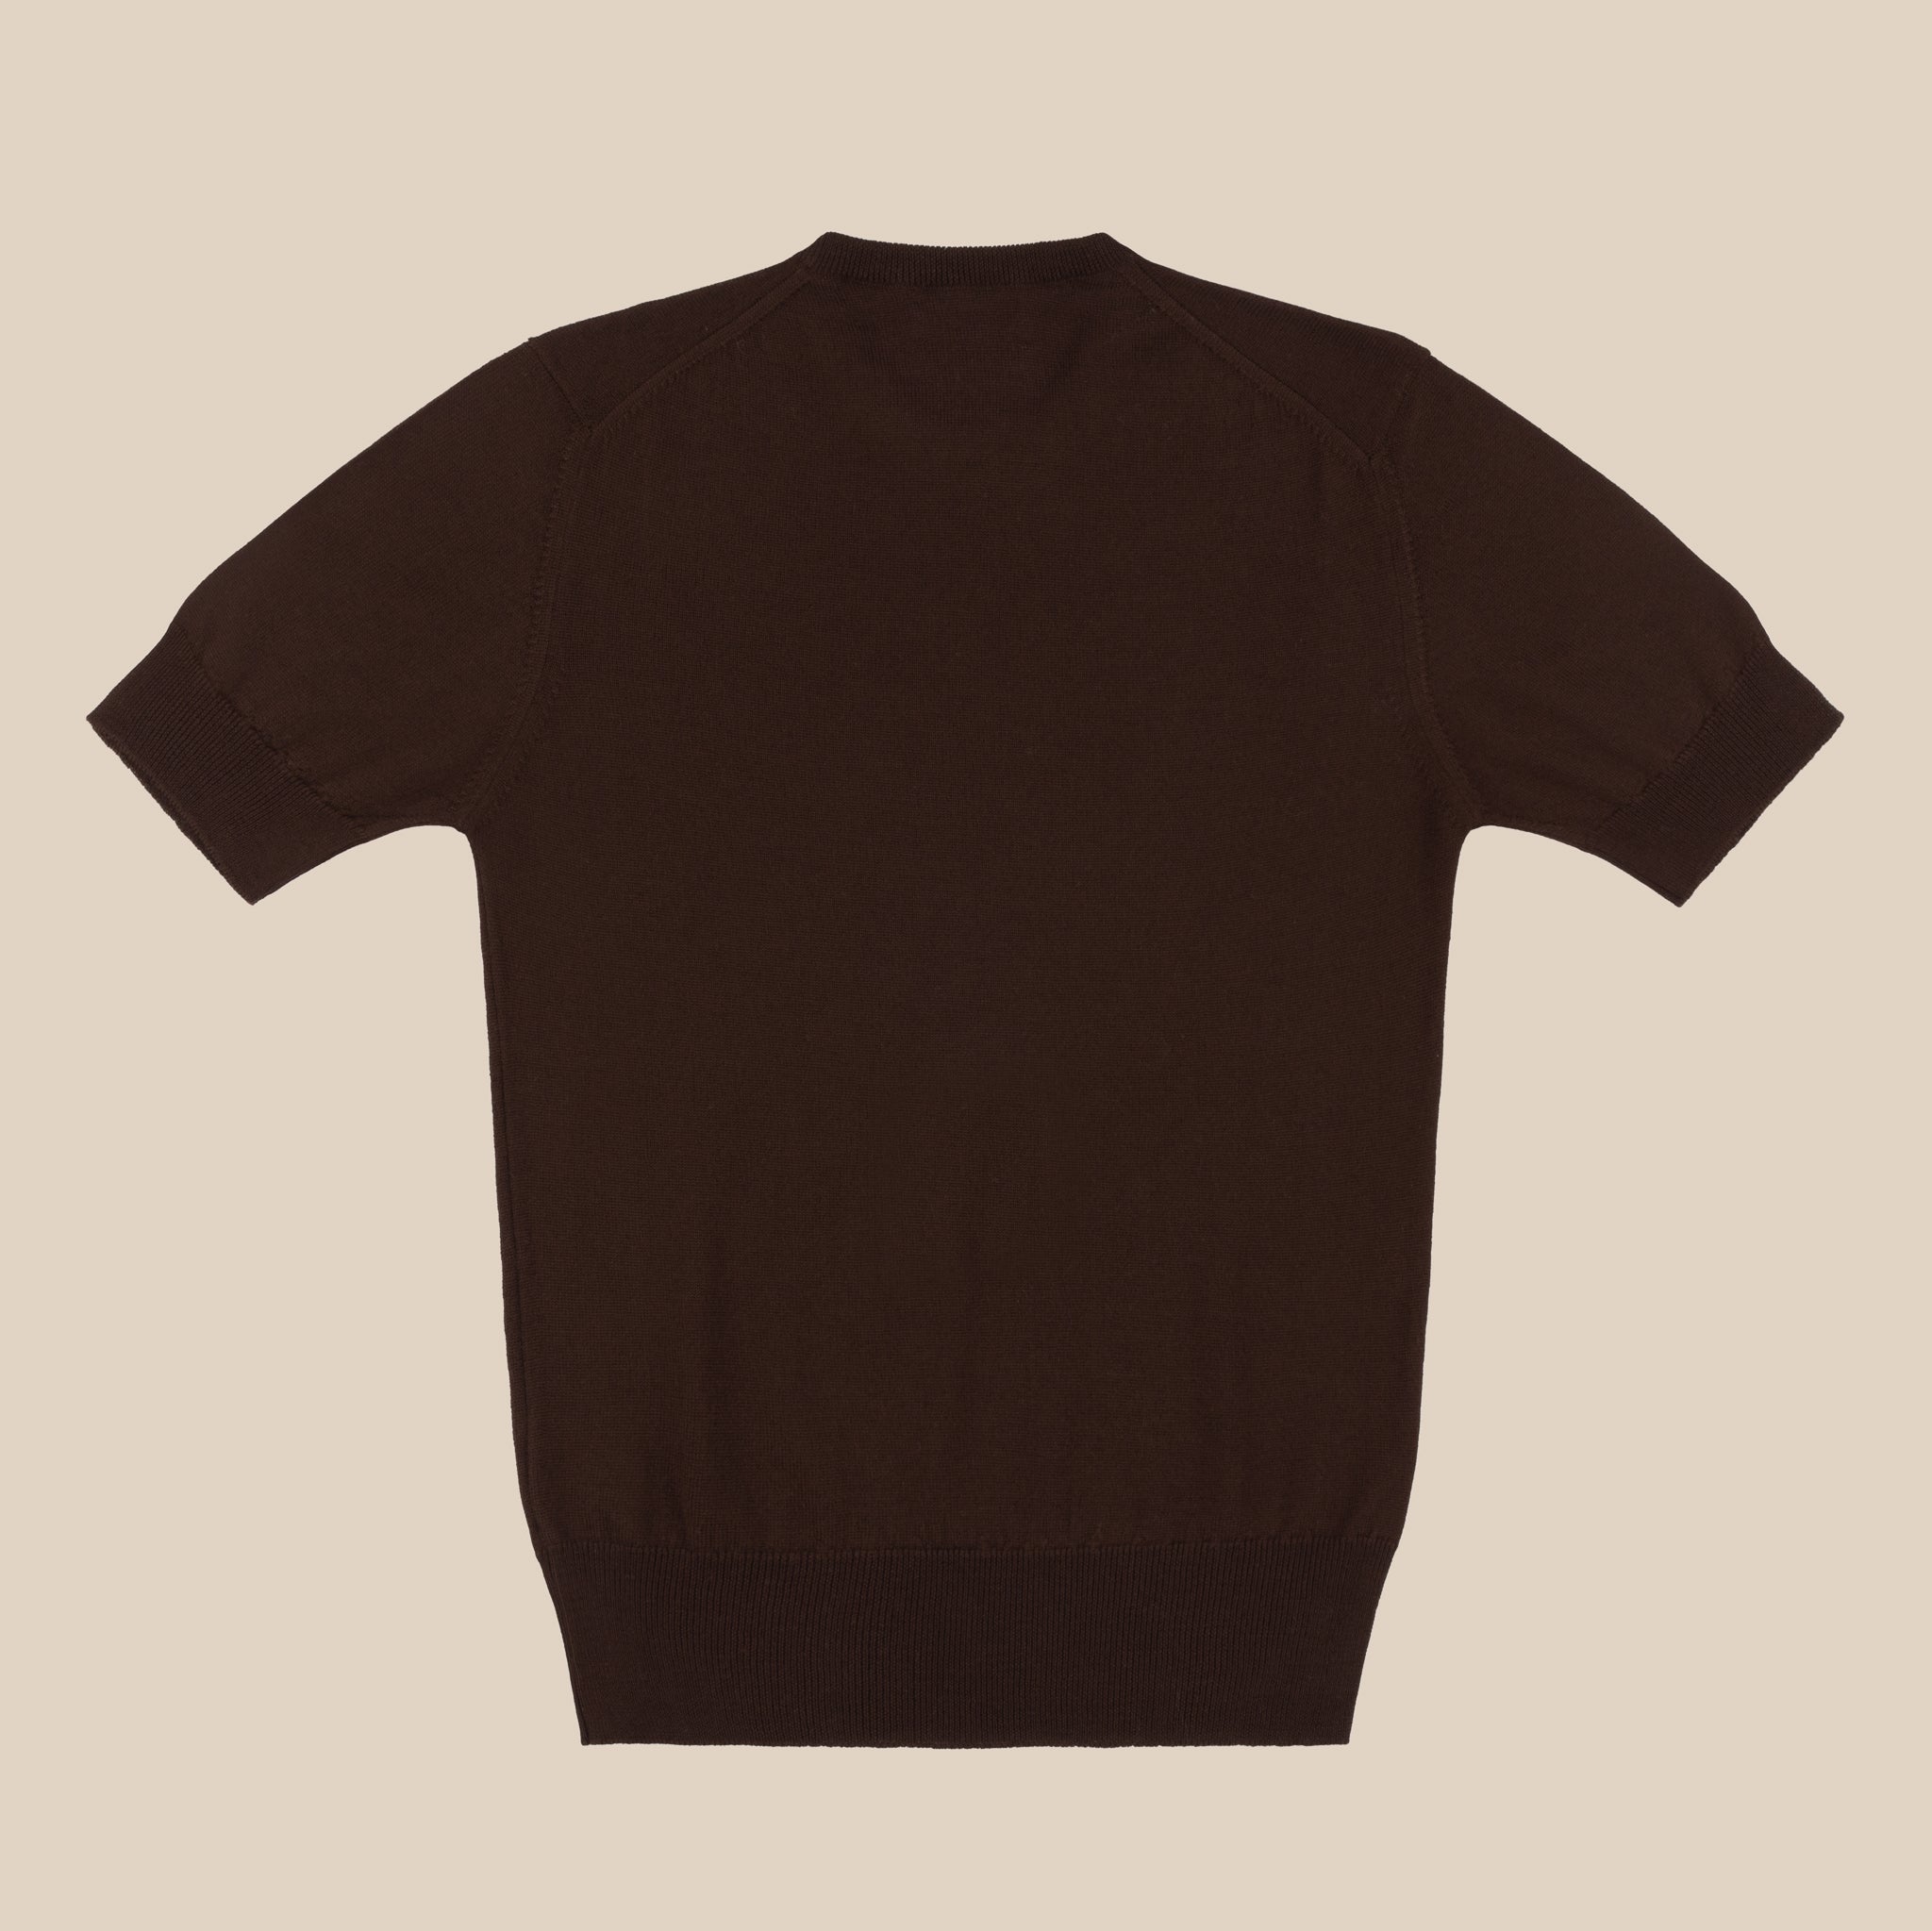 Merino sport shirt in brown - Colhay's